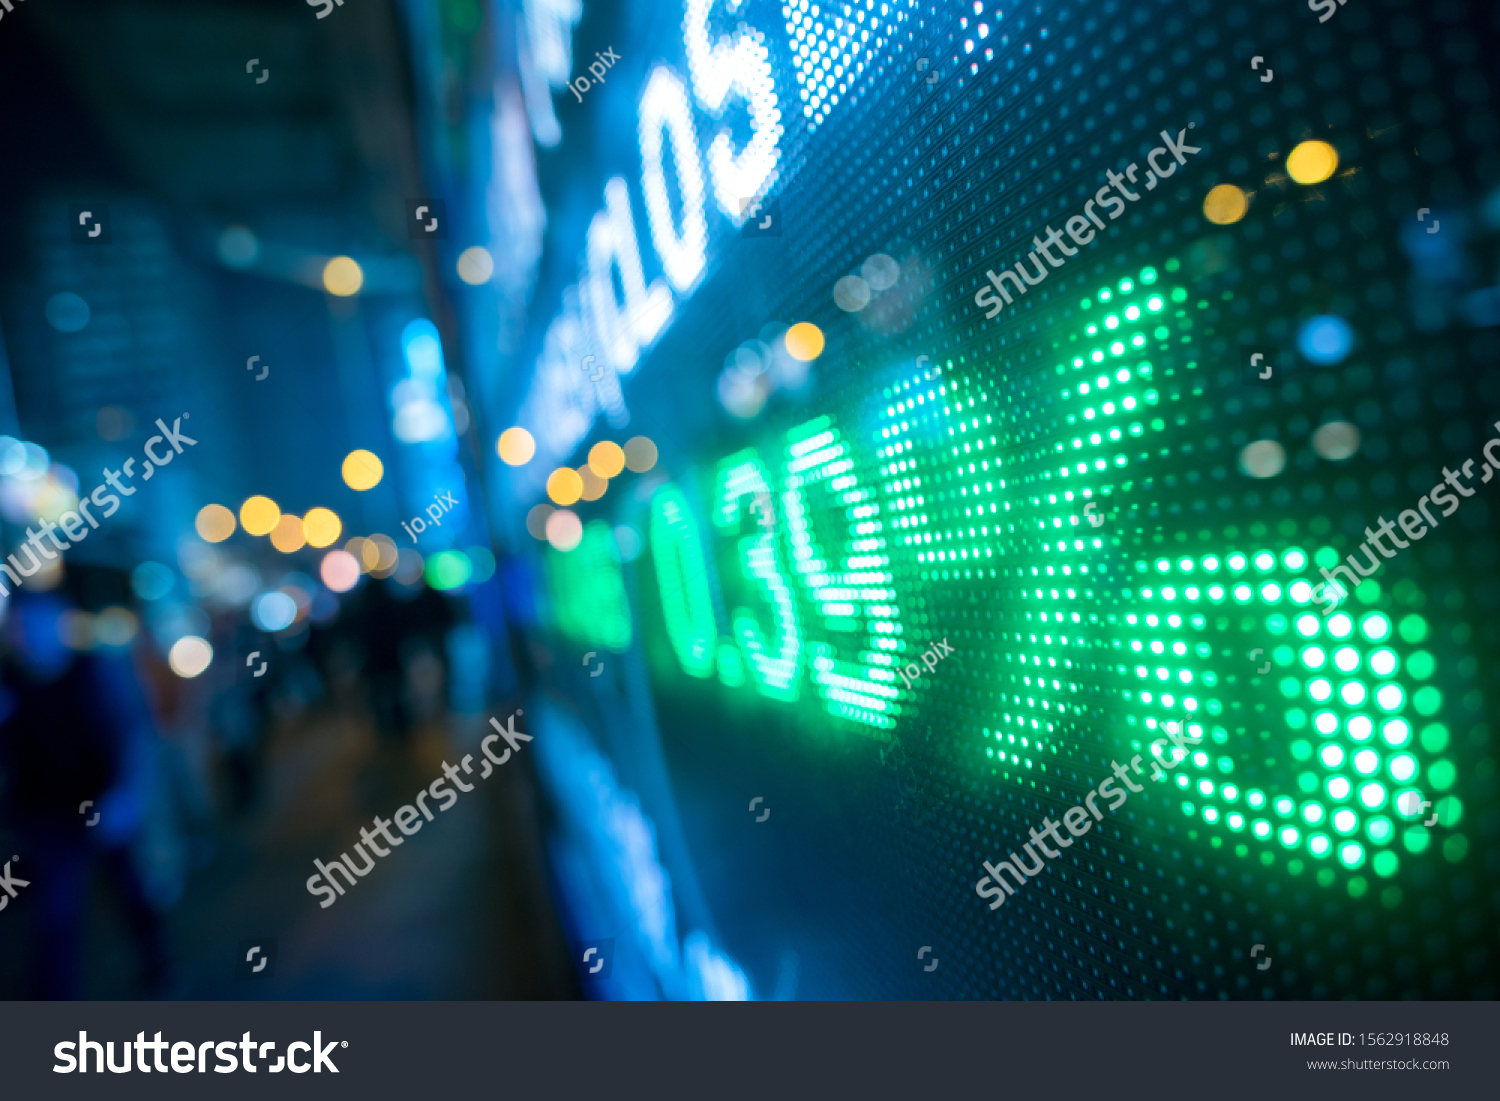 Display stock market numbers with defocused street lights background #1562918848